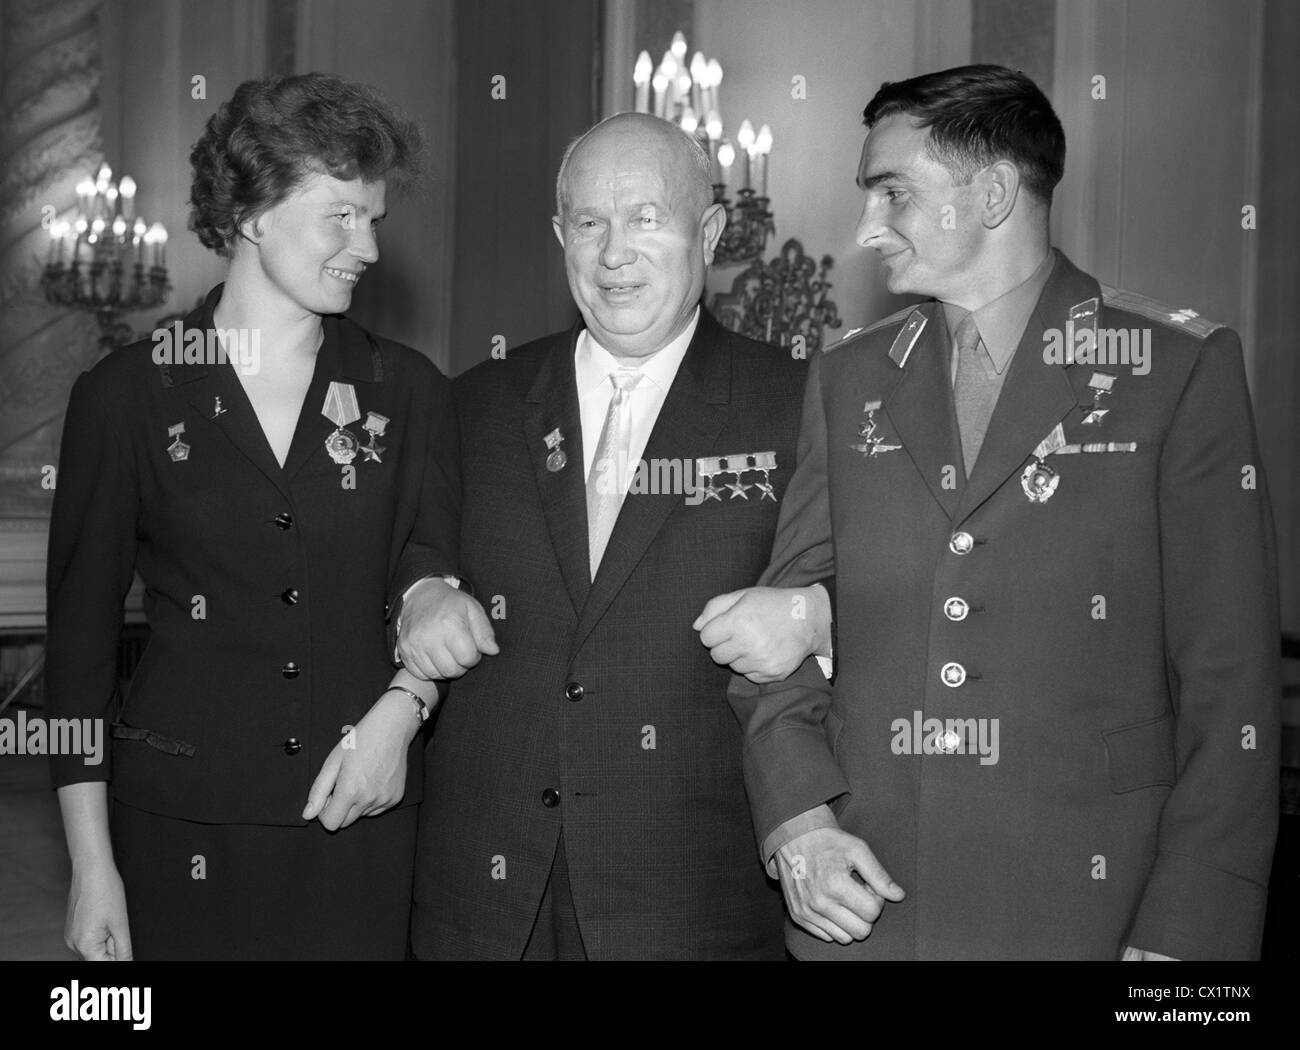 Itar Tass La Urss Moscú Pcus Primer Secretario Nikita Khrushchev En El Centro Con Pilotos